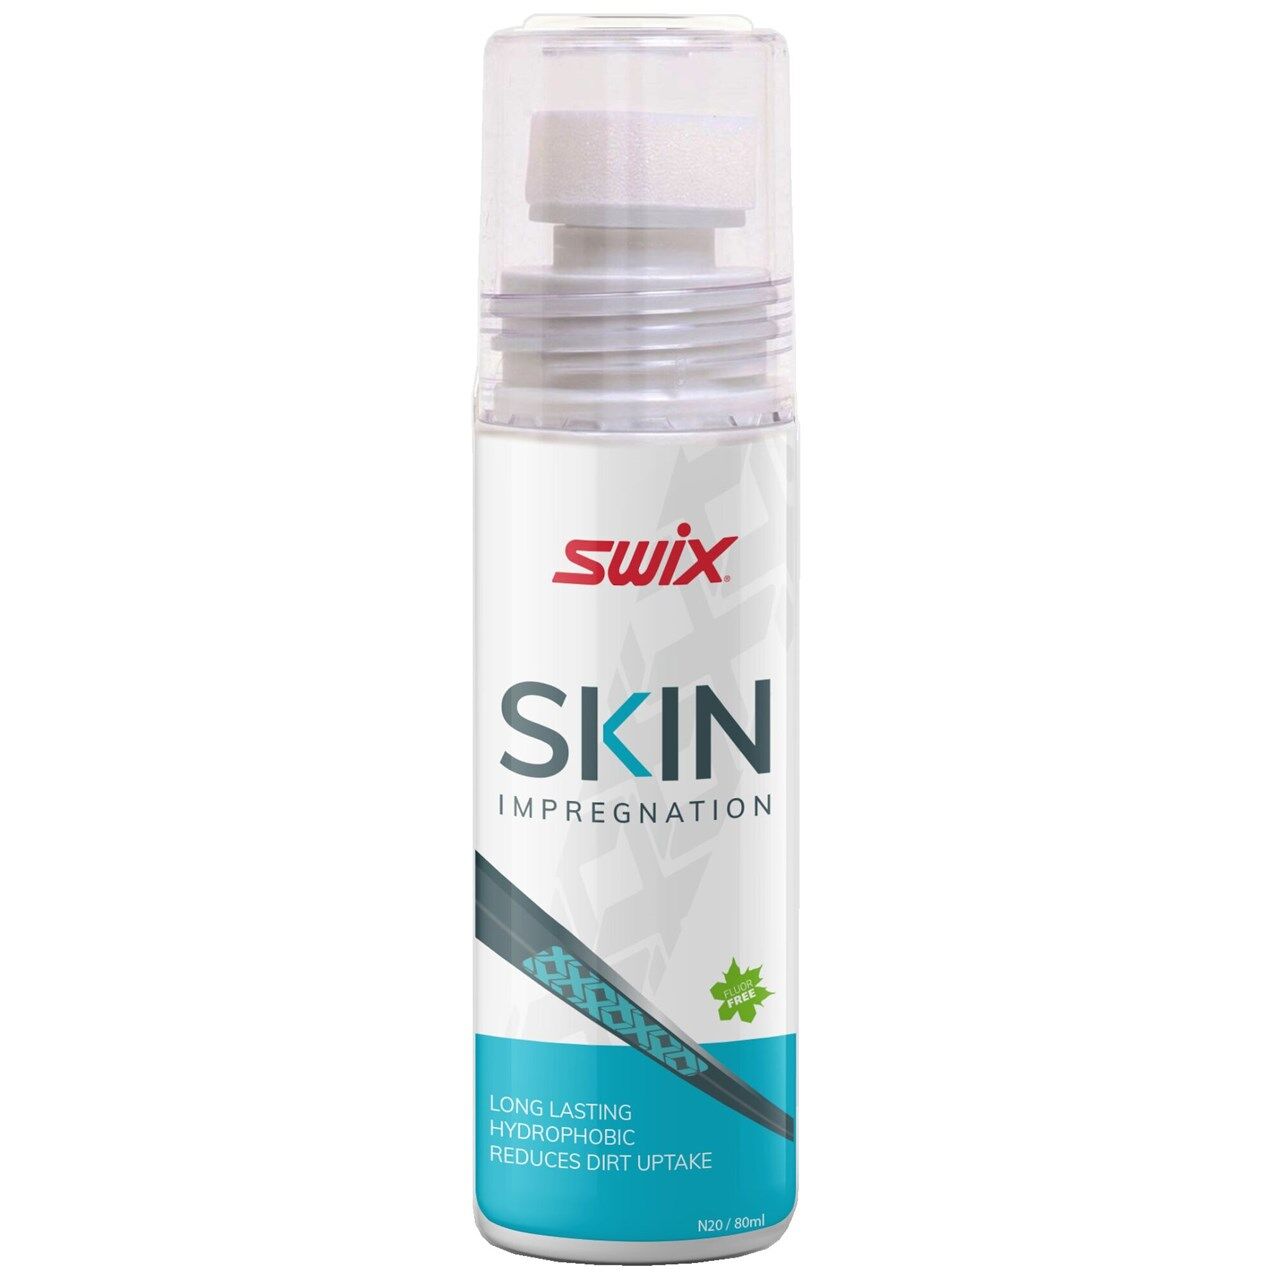 Swix Skin Impregnation (N20), felleimpregnering 80ml 2022